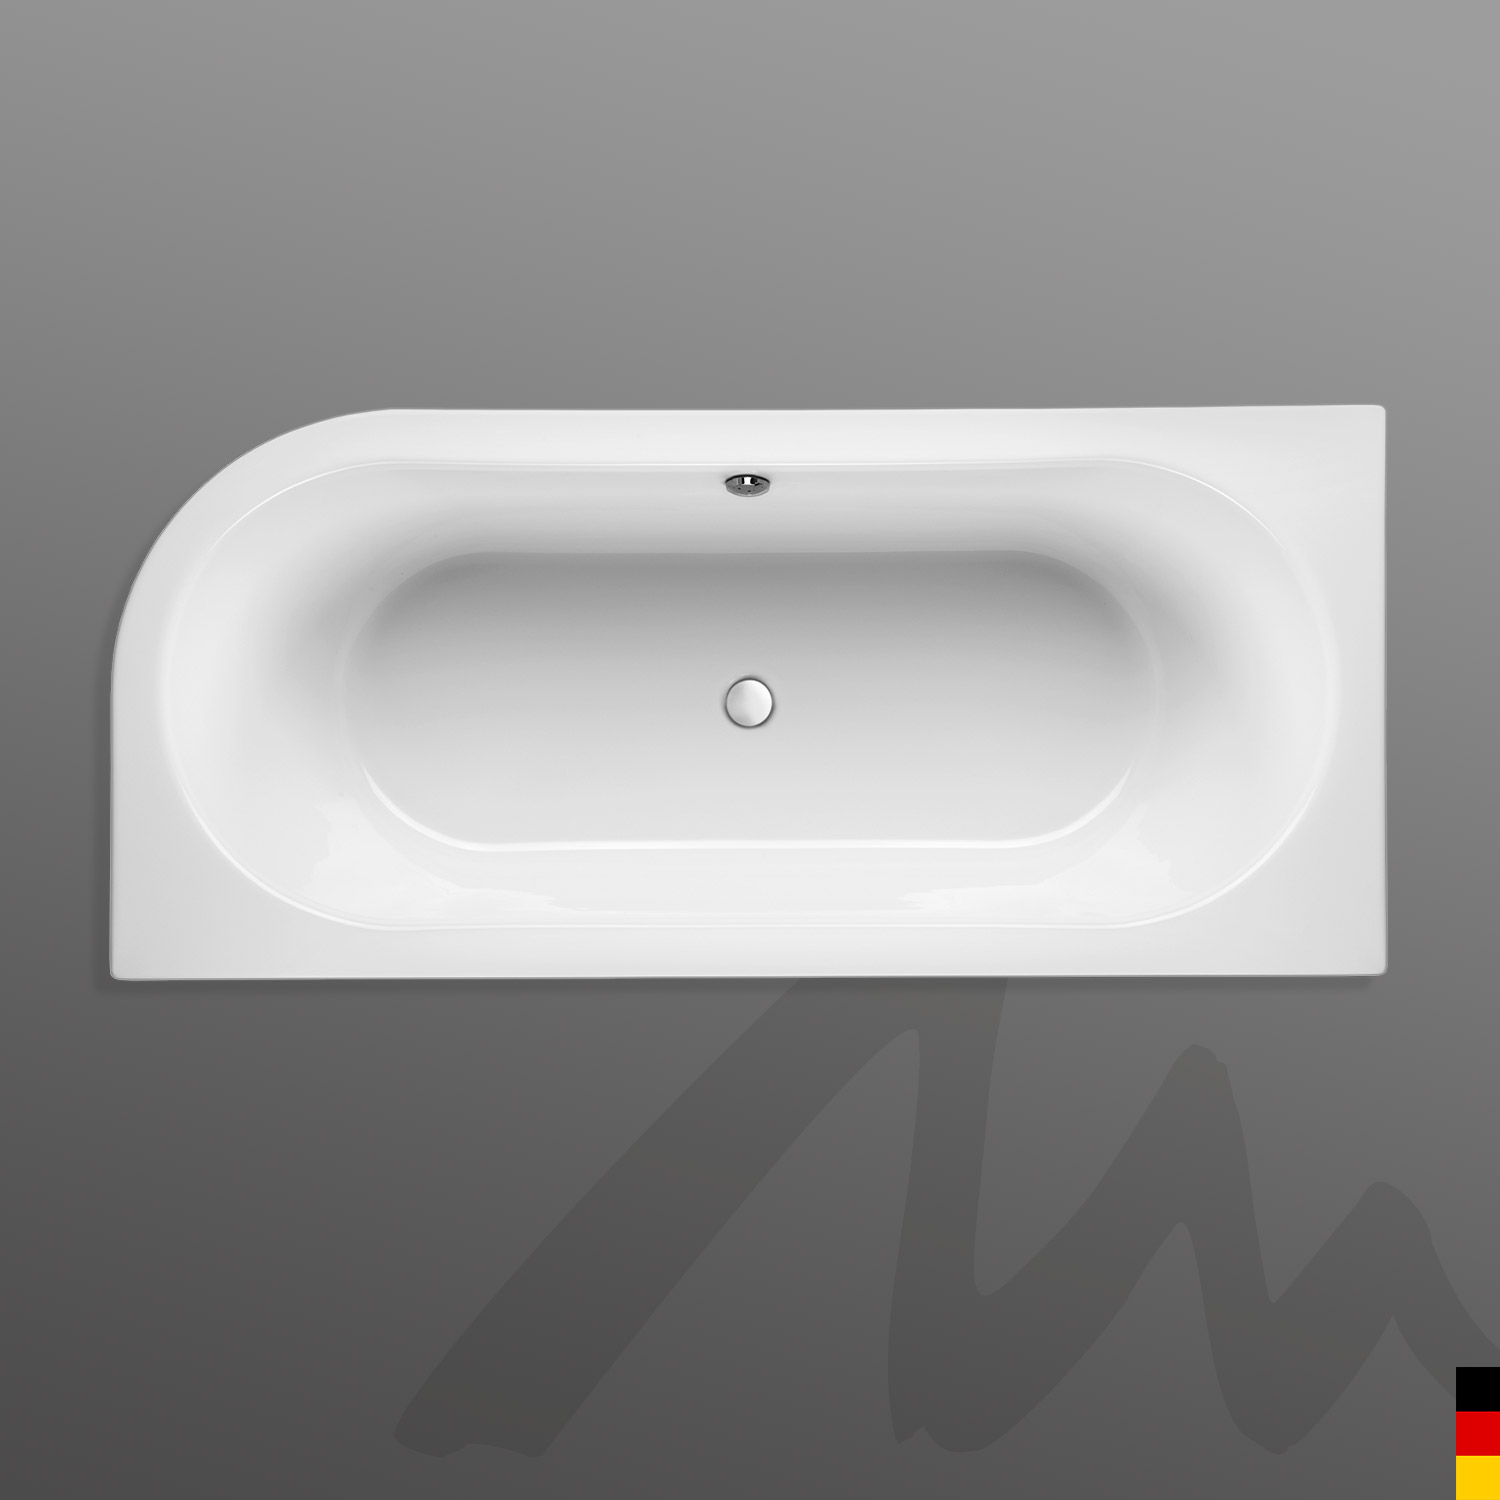 Mauersberger Badewanne Oval Primo 1 - 170/75 duo  Ausführung links  170x75x44  Farbe:weiß